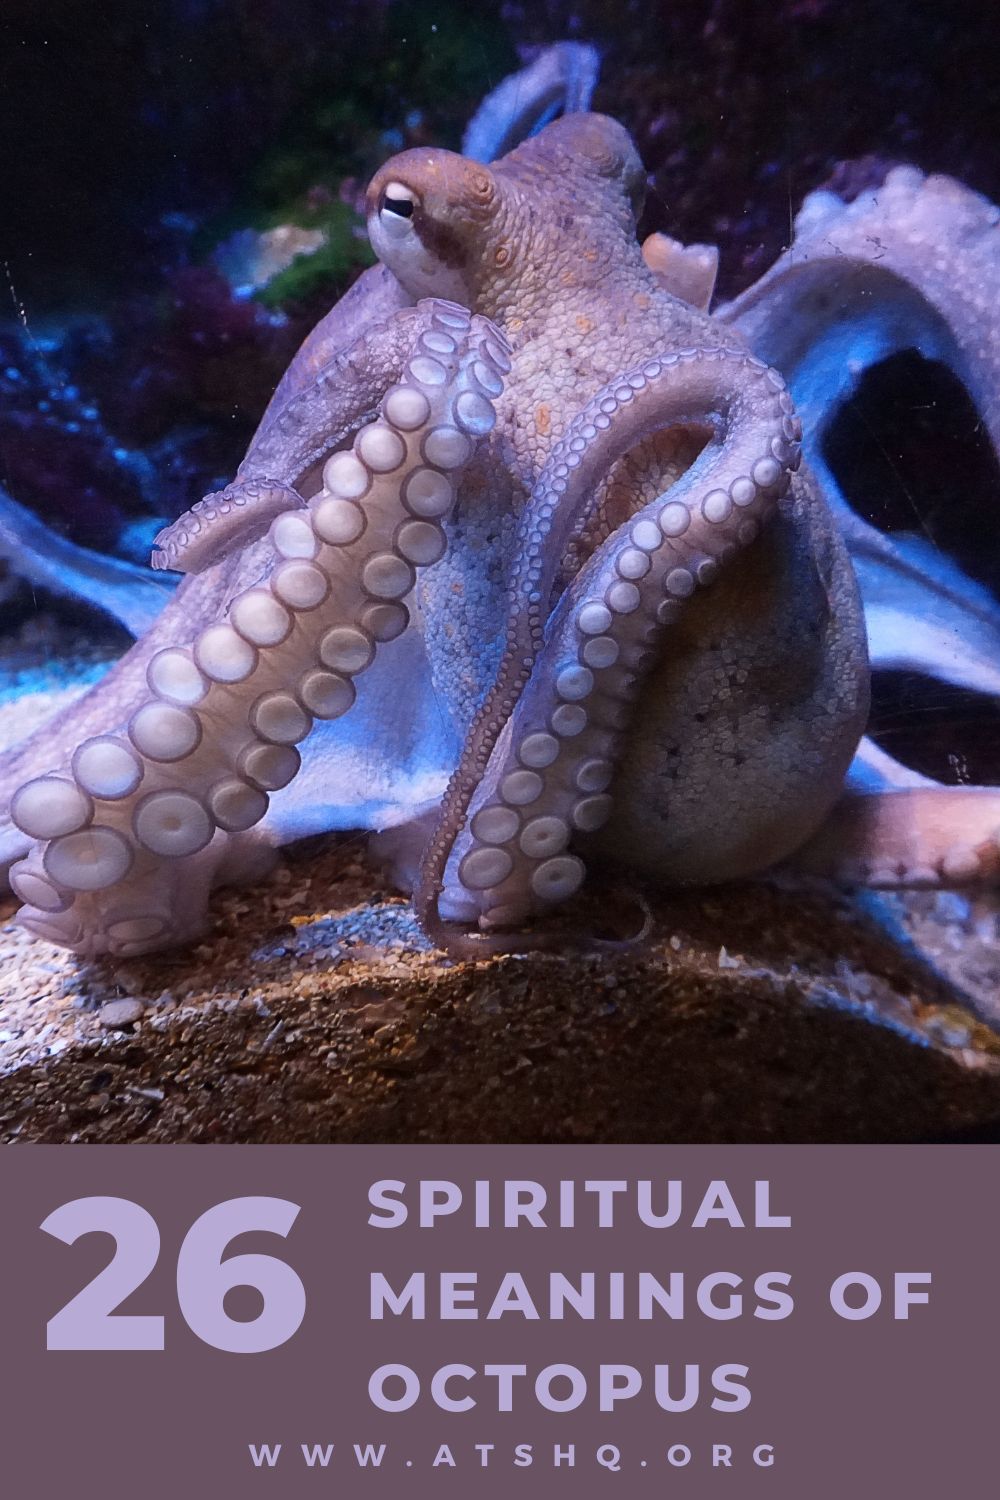 octopus symbolism